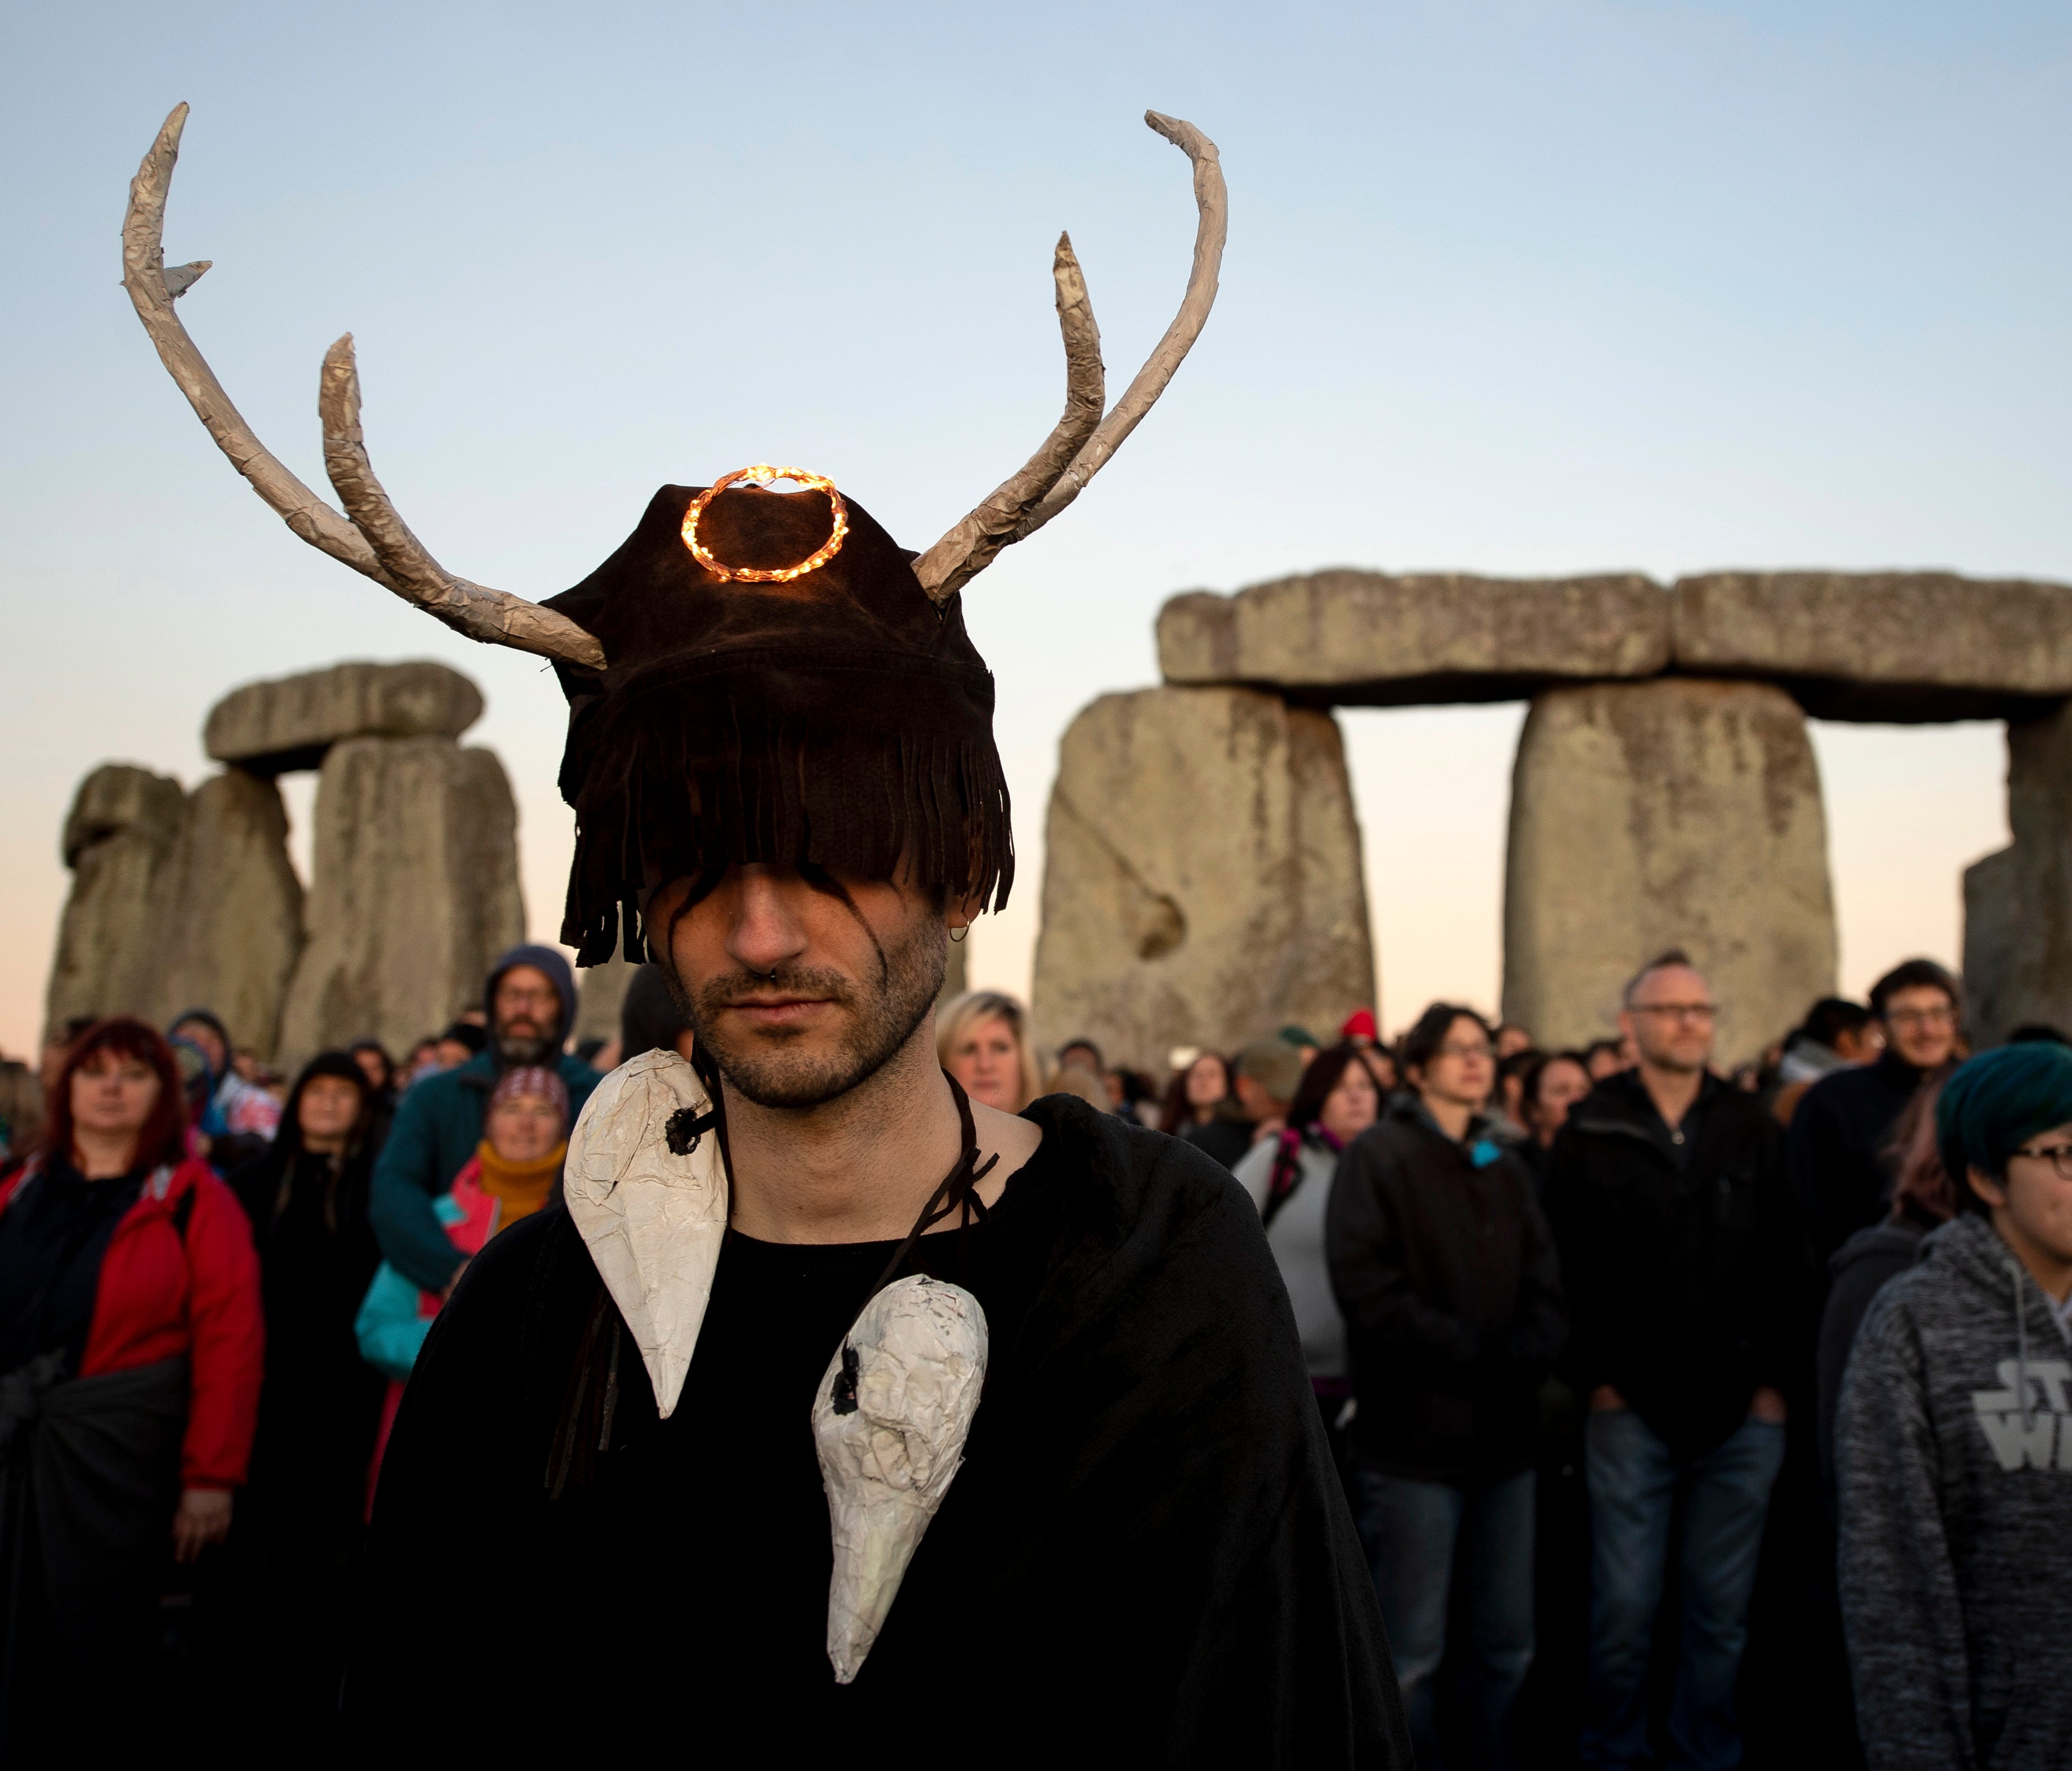 Nearly 1 million people visit Stonehenge each year.